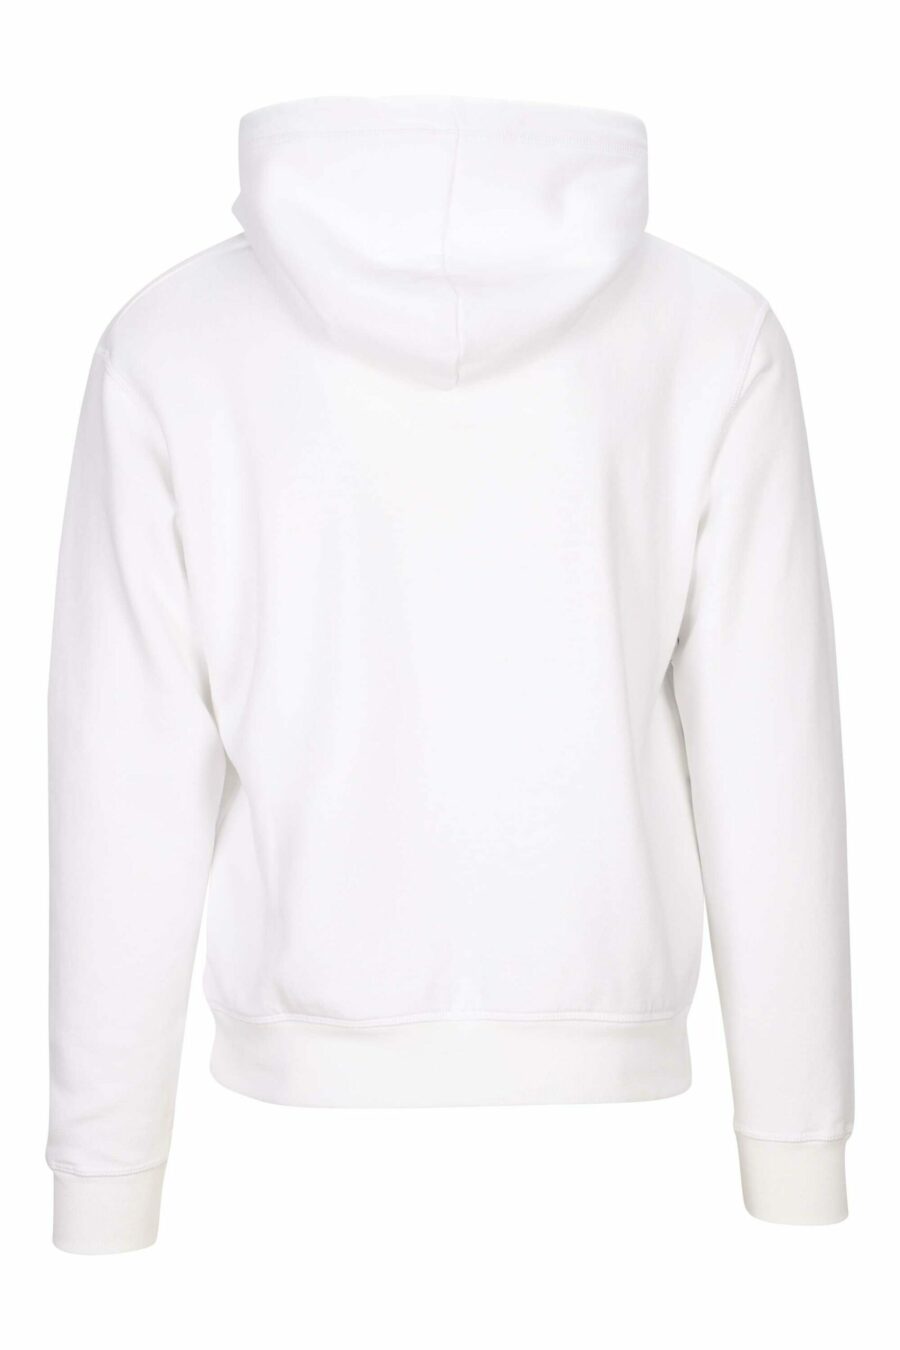 Weißes Kapuzensweatshirt mit vertikalem "icon splash" Maxilogo - 8054148398705 1 skaliert